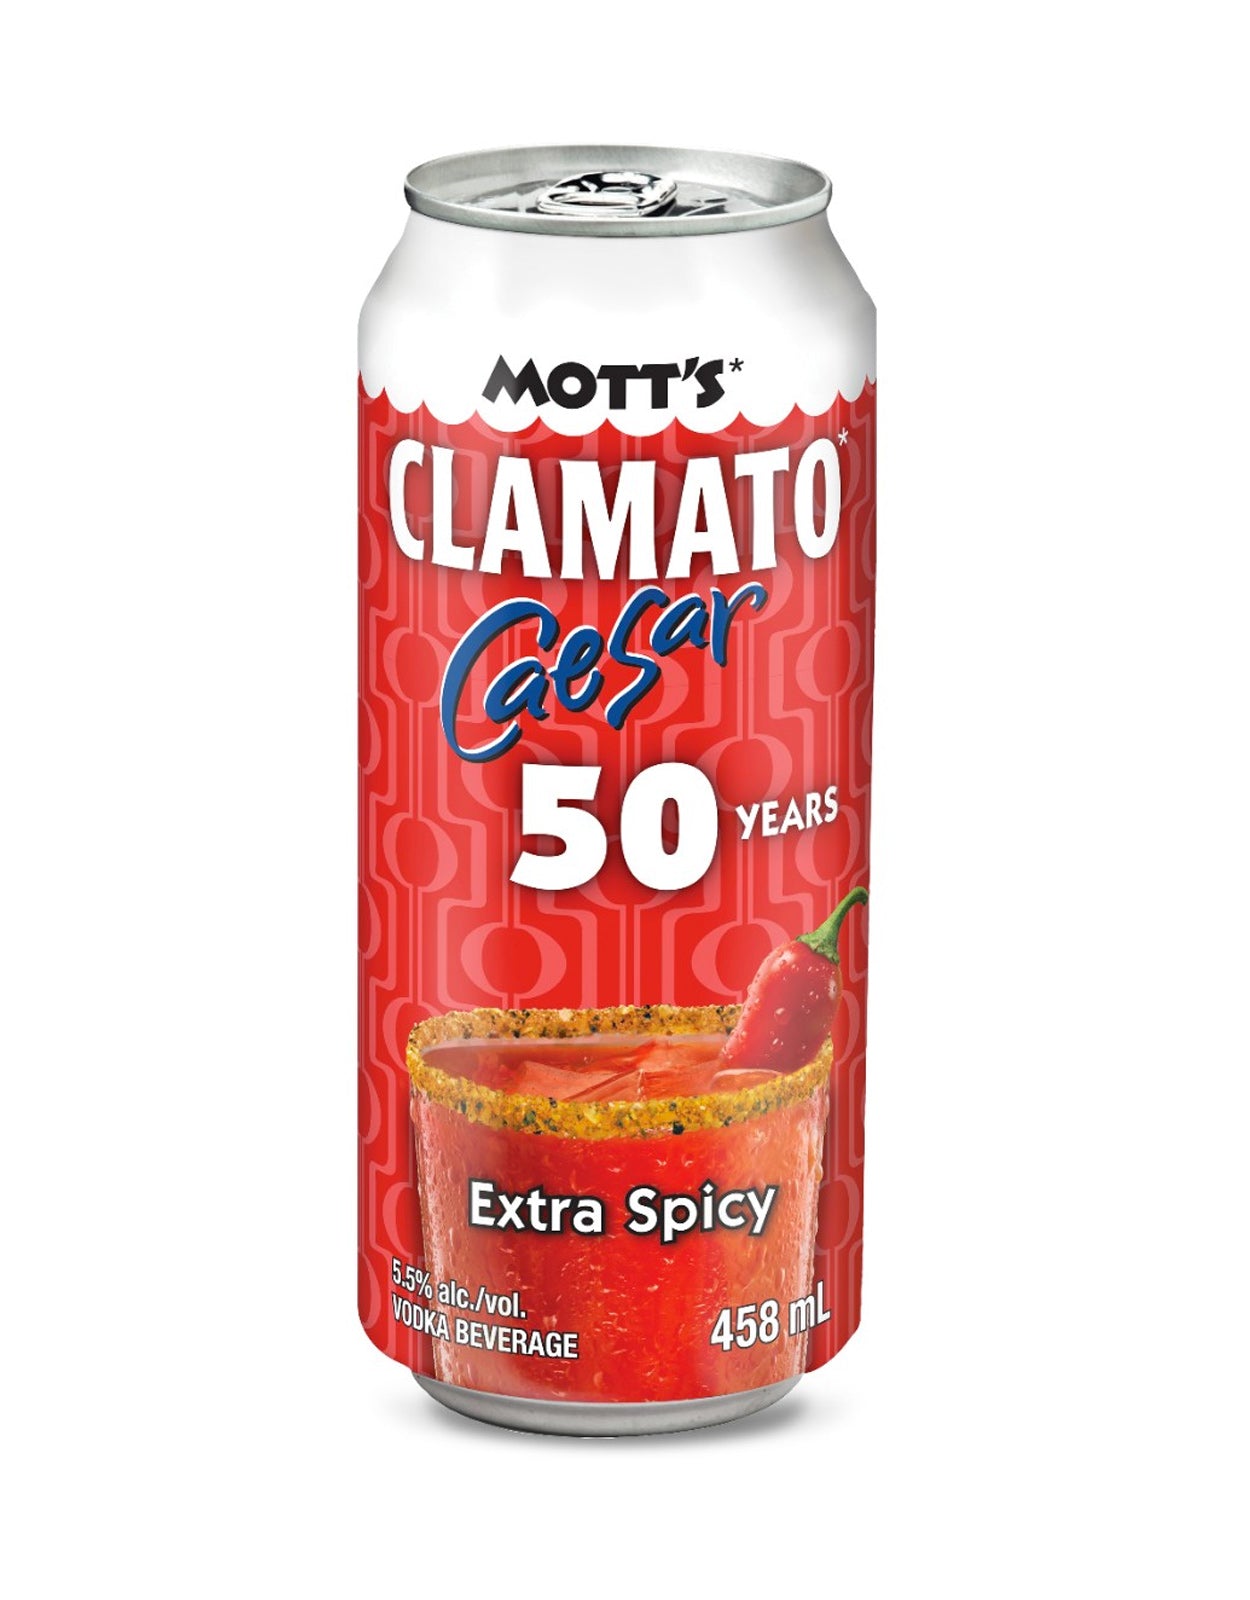 Mott's Clamato Caesar Extra Spicy 458 ml - 24 Cans